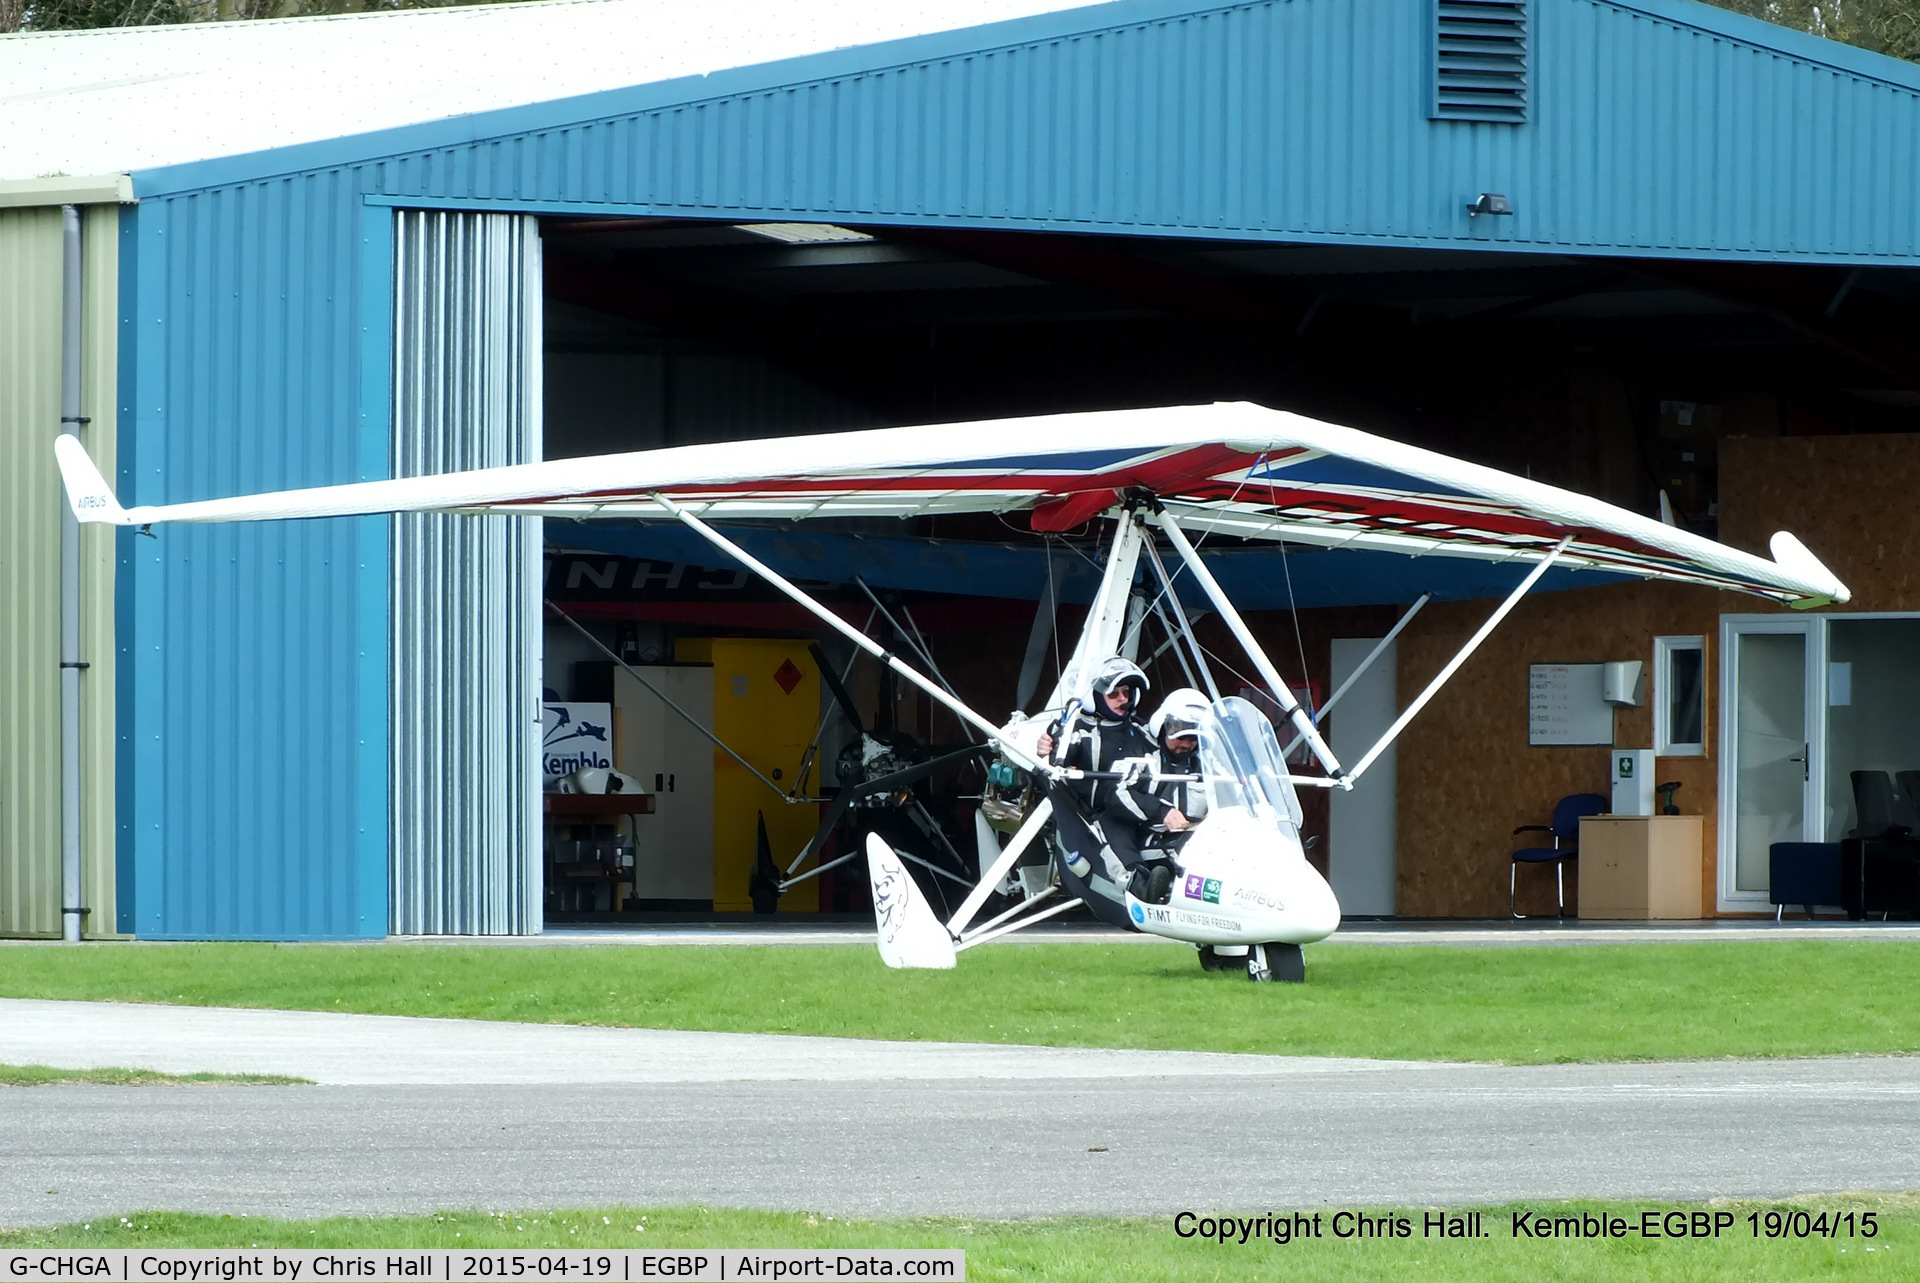 G-CHGA, 2012 P&M Aviation Quik GTR C/N 8603, with a new 